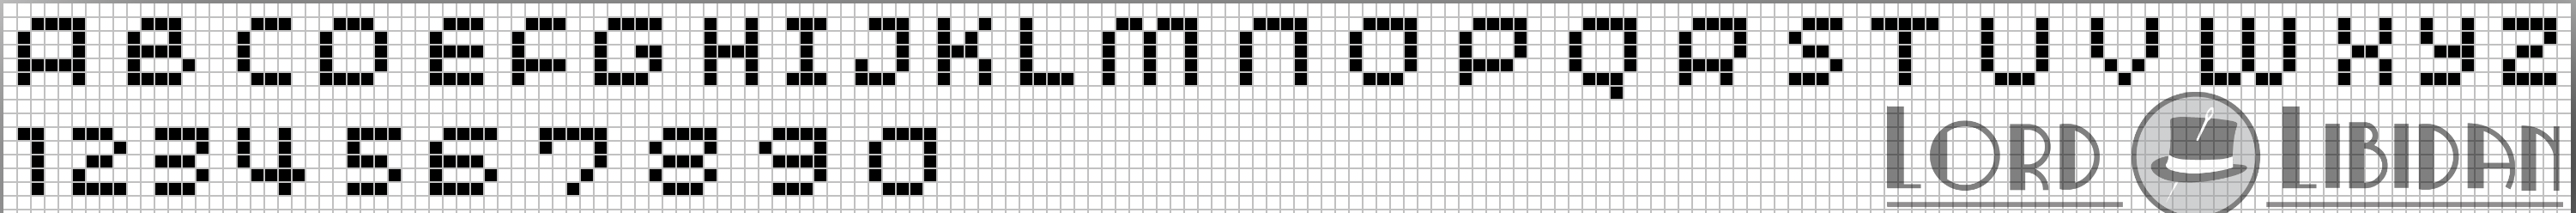 Simplified Minature Cross Stitch Alphabet Pattern Free Download By Lord Libidan